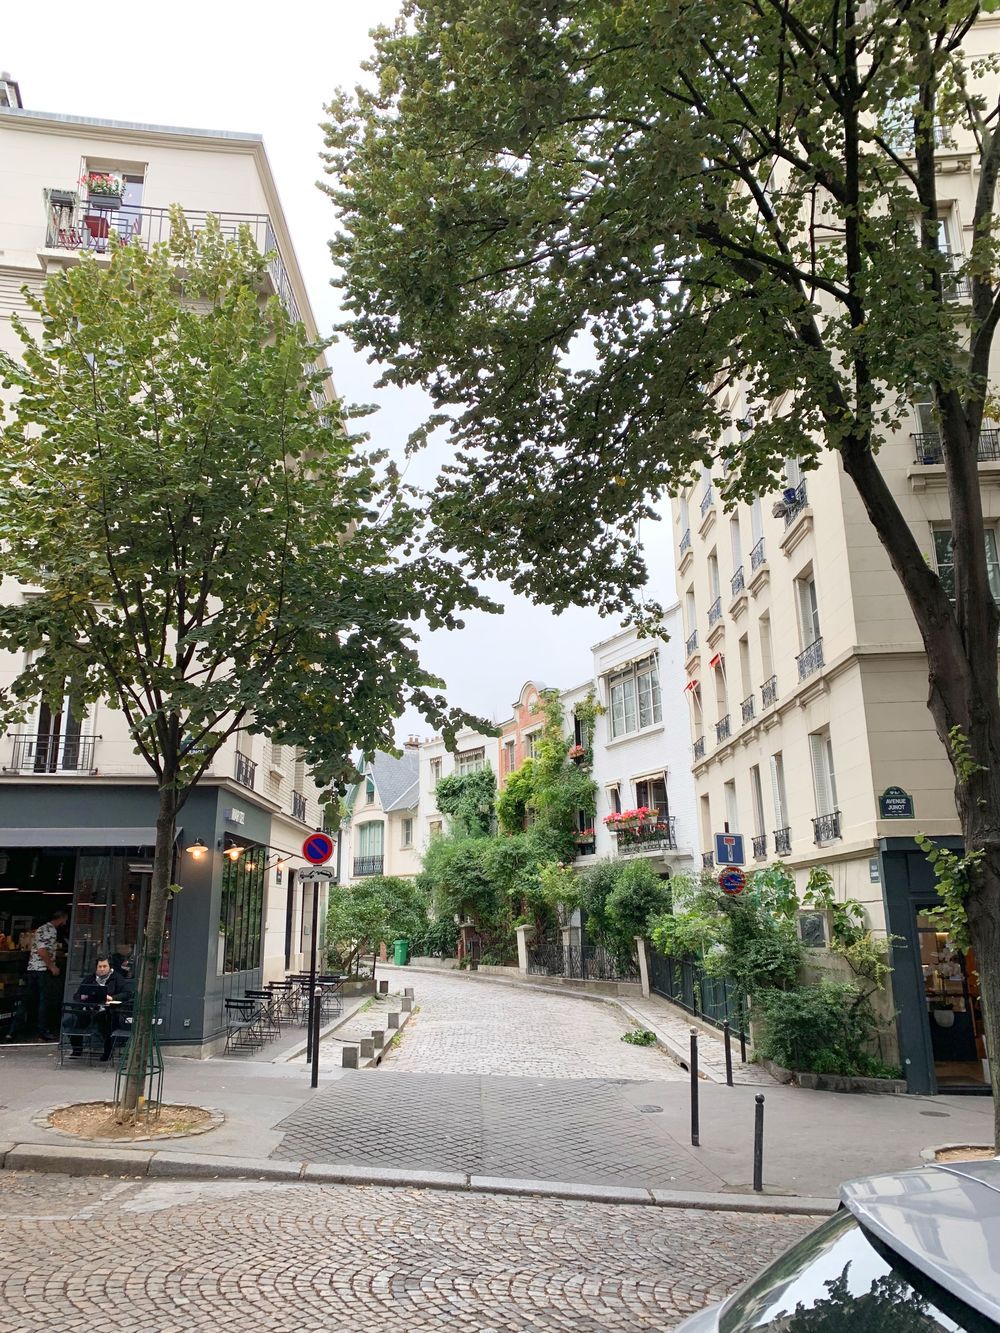 Just North of Montmartre, Paris, France